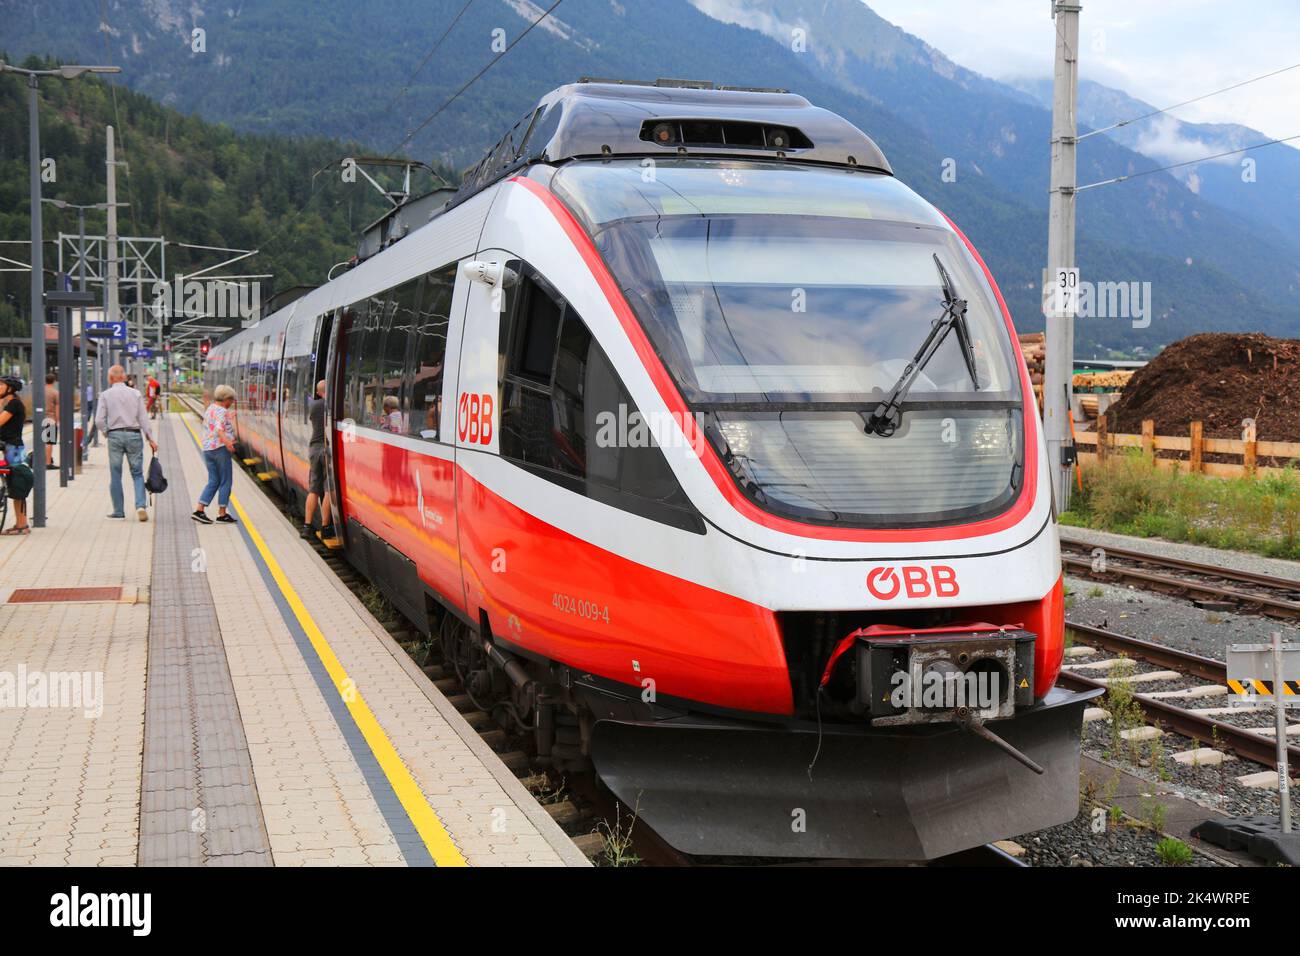 CARINTHIA, AUSTRIA - AUGUST 7, 2022: Bombardier Talent passenger train of Austrian Federal Railways OBB at Hermagor railway station in Carinthia, Aust Stock Photo